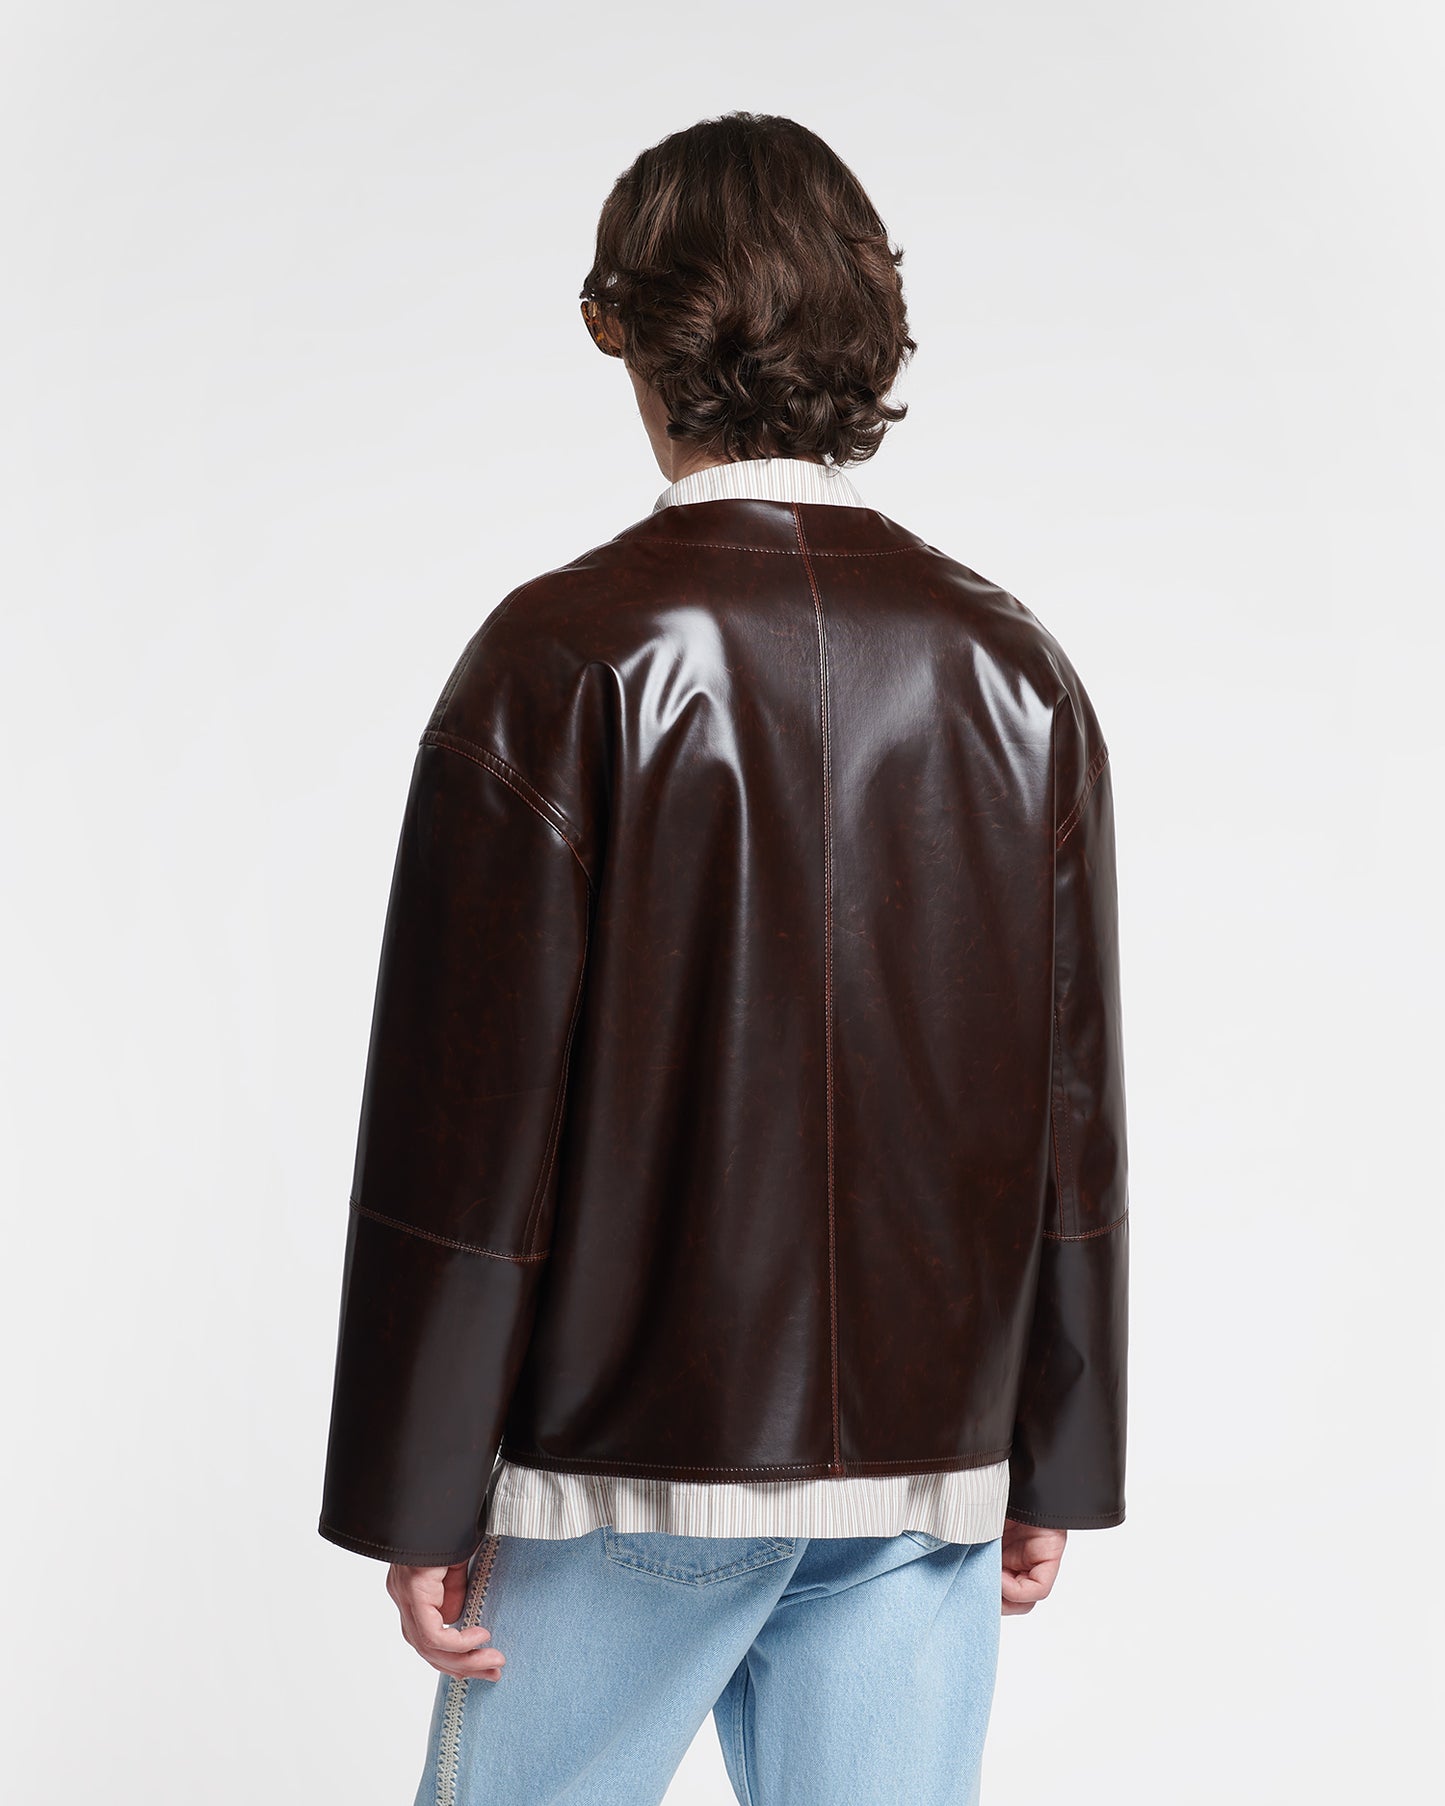 Edee - Alt Vintage Leather Jacket - Dark Brown